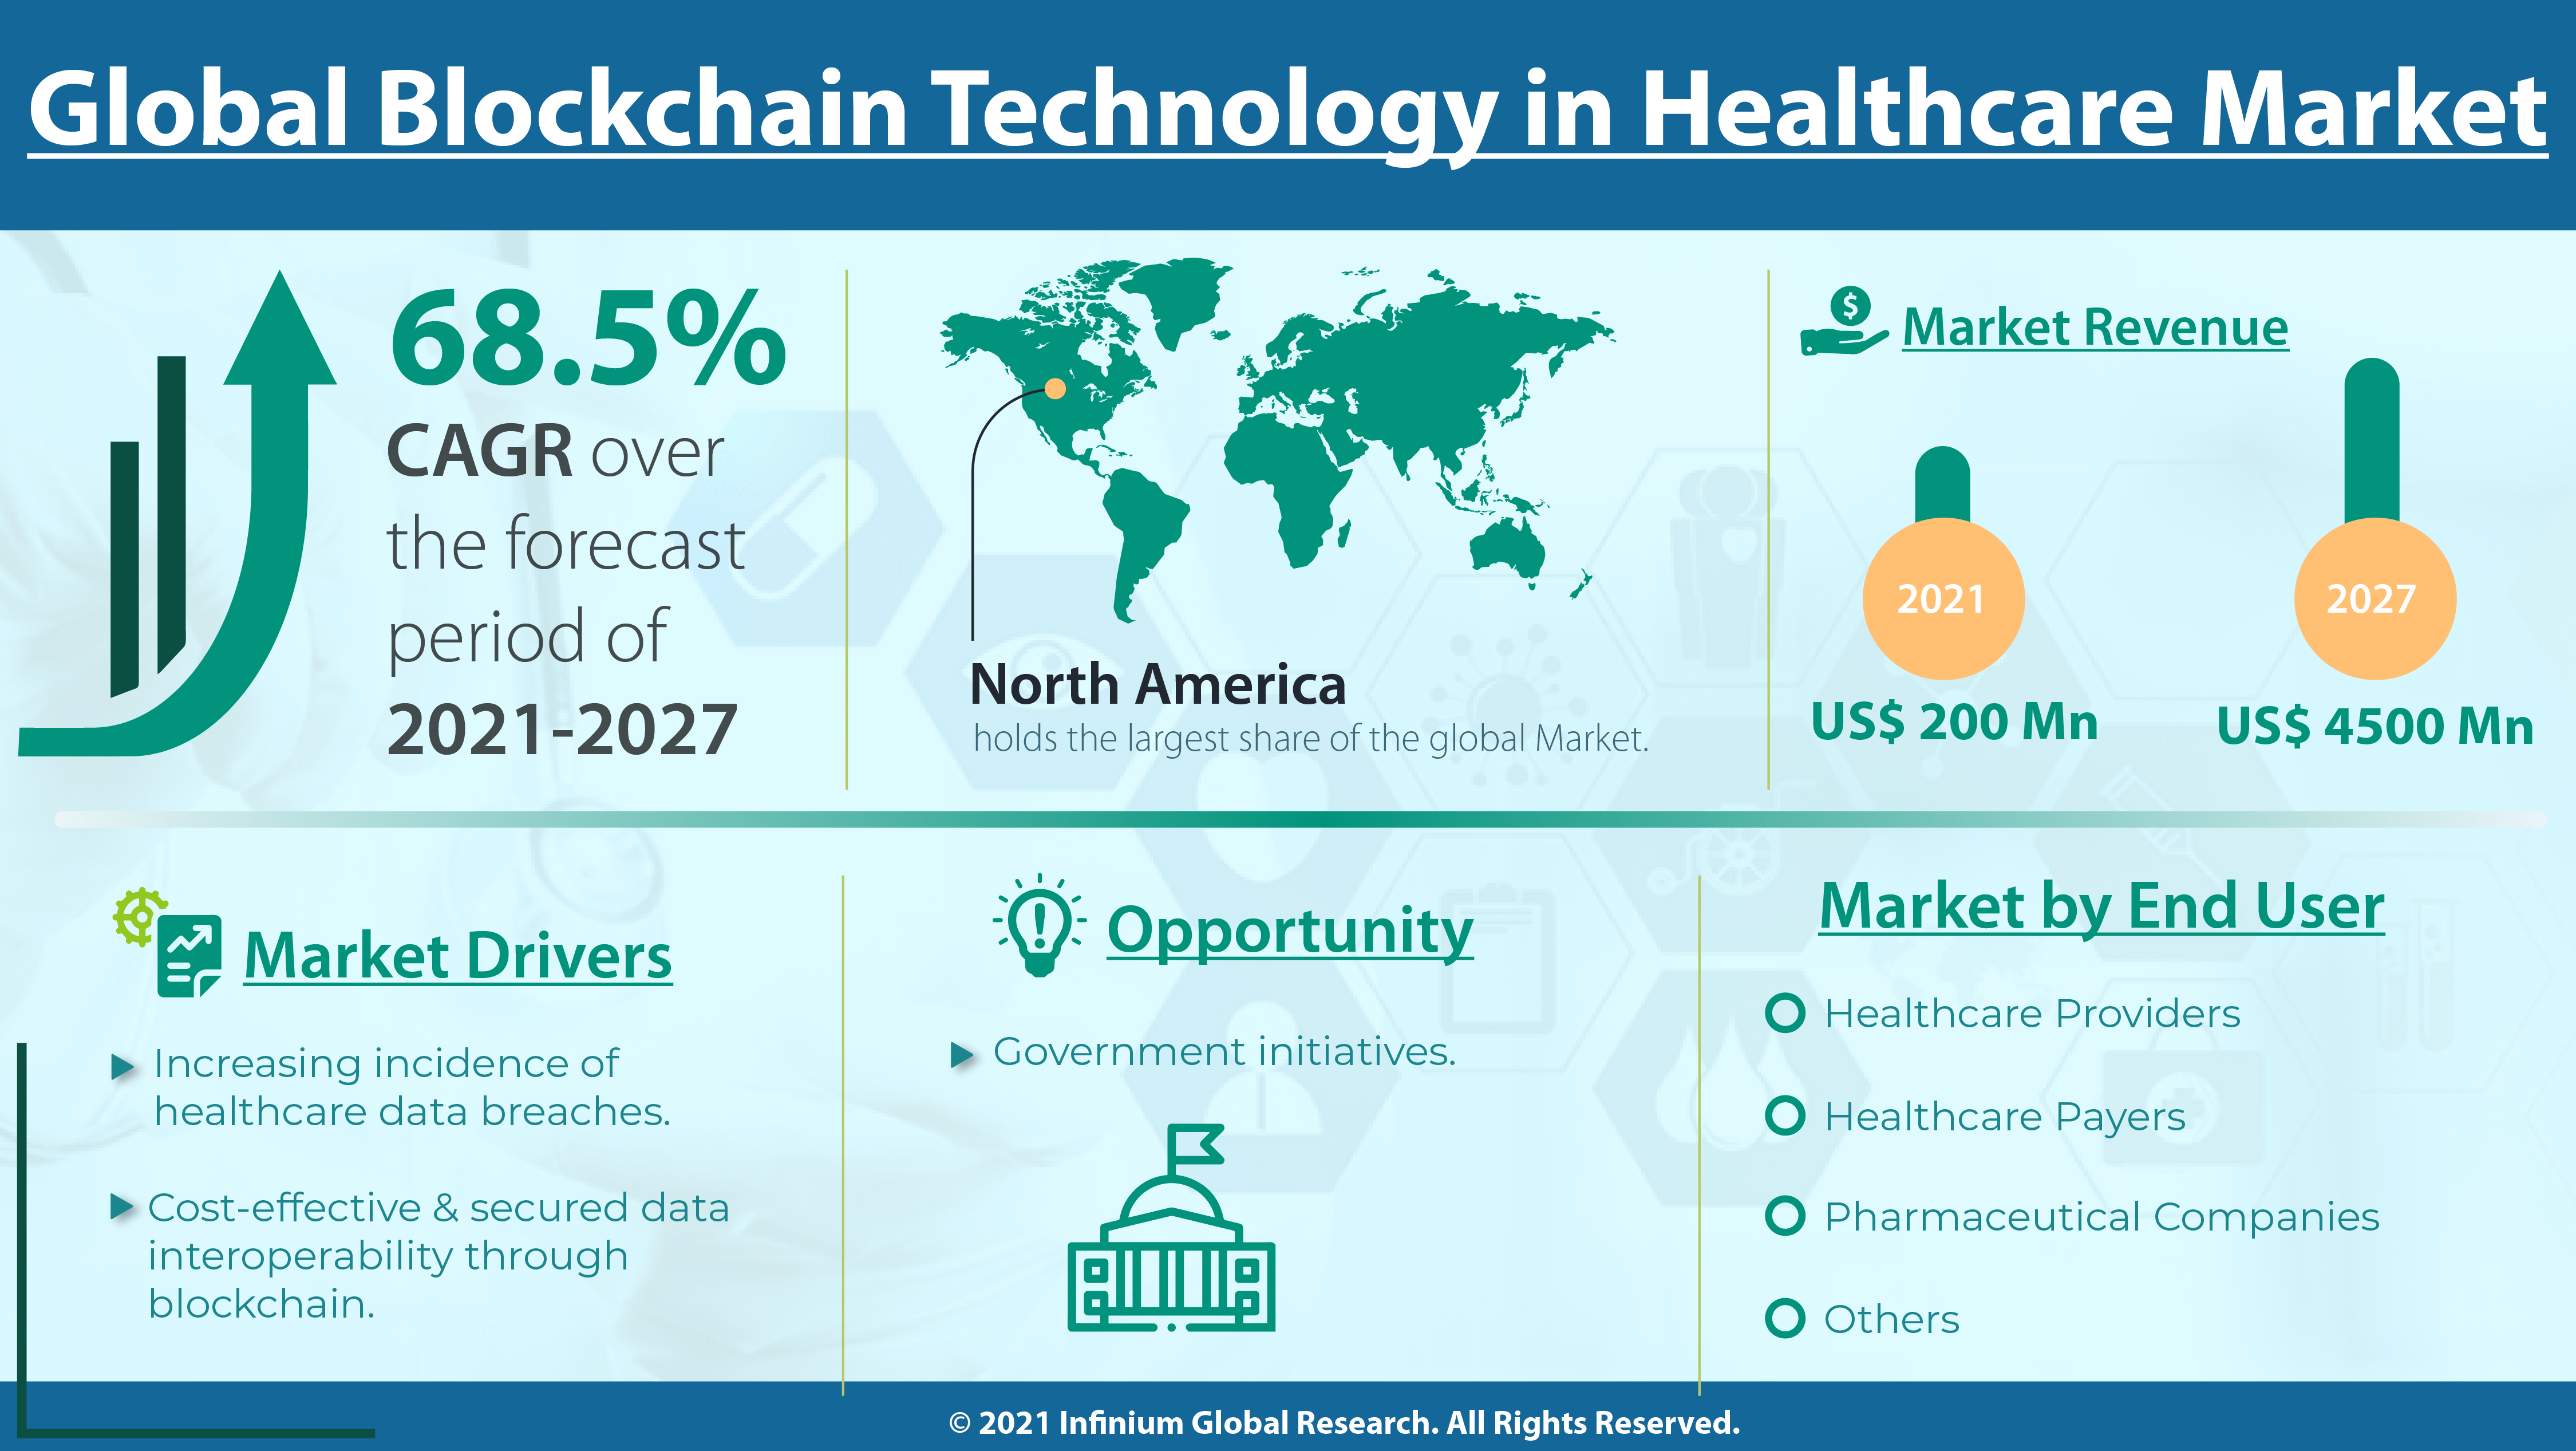 Blockchain Technology in Healthcare Market